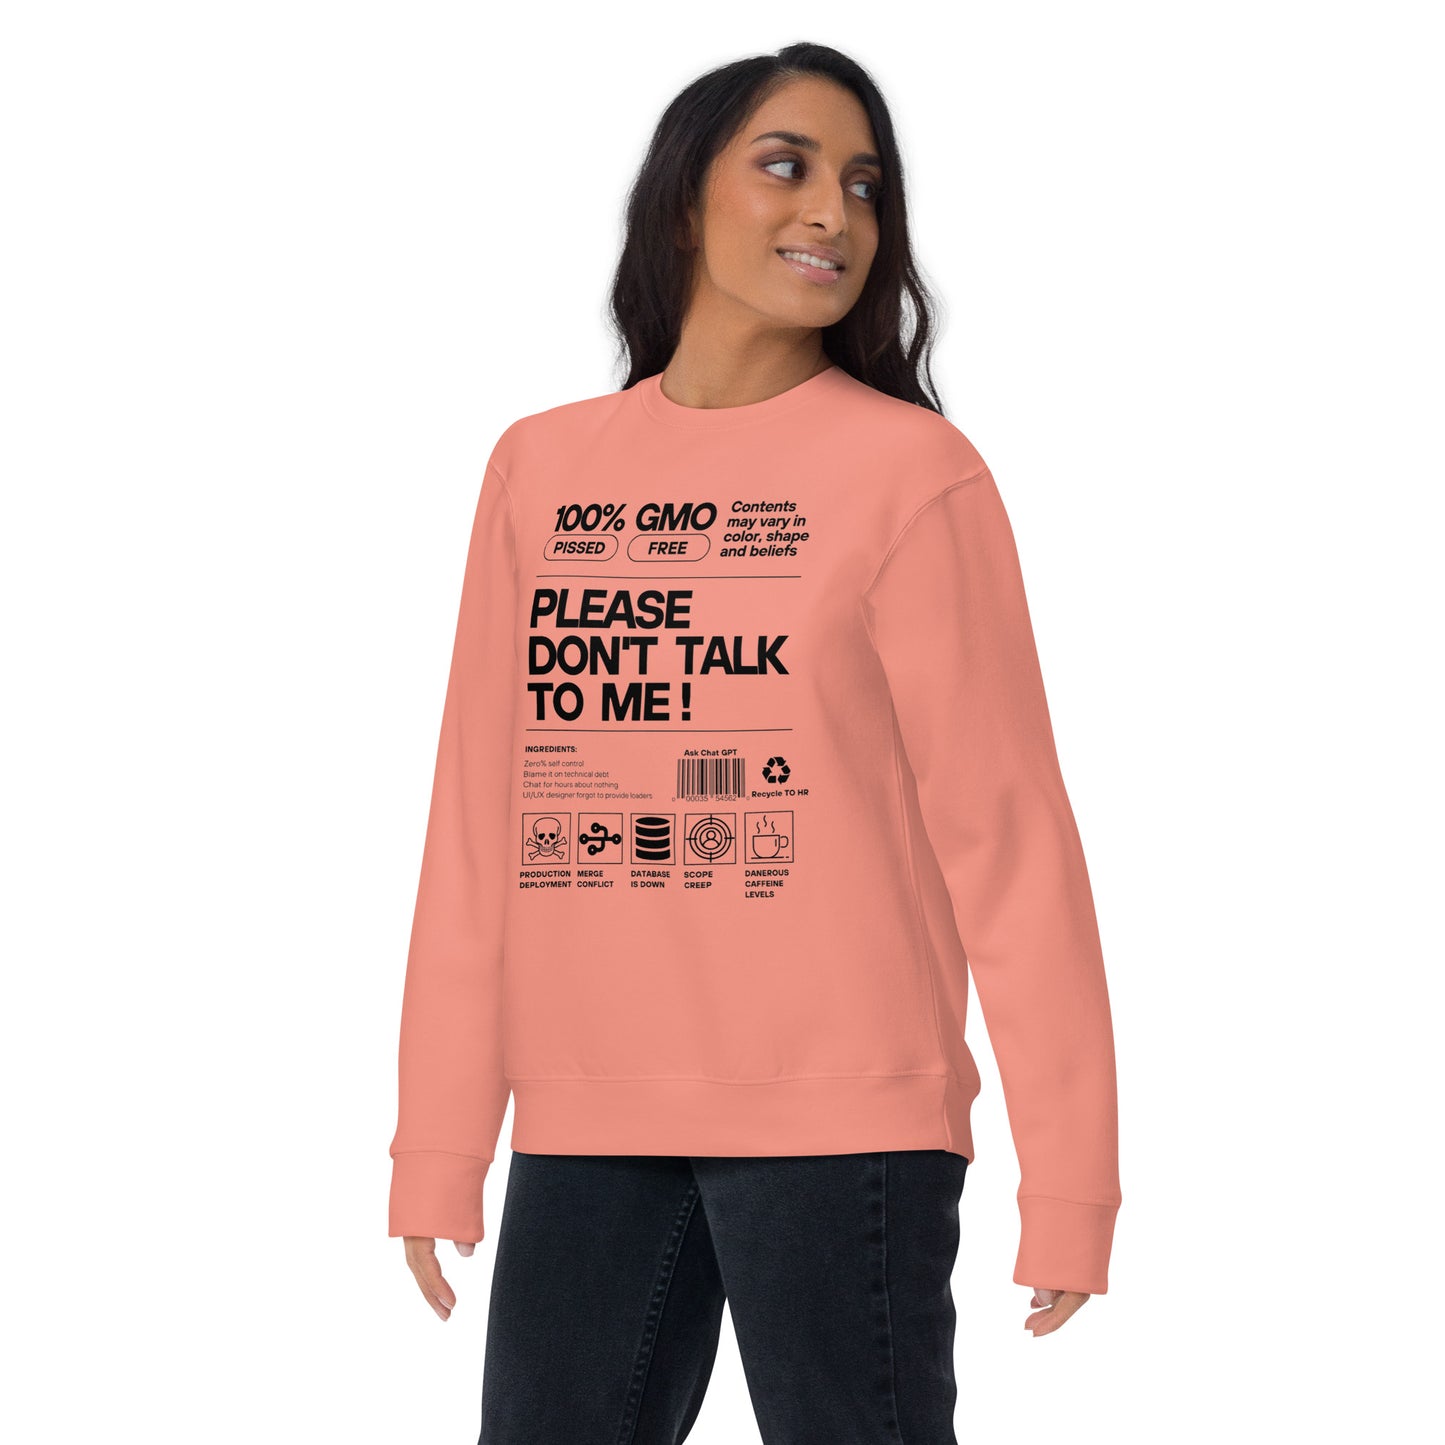 Don't Talk to Me Premium Sweatshirt - Light